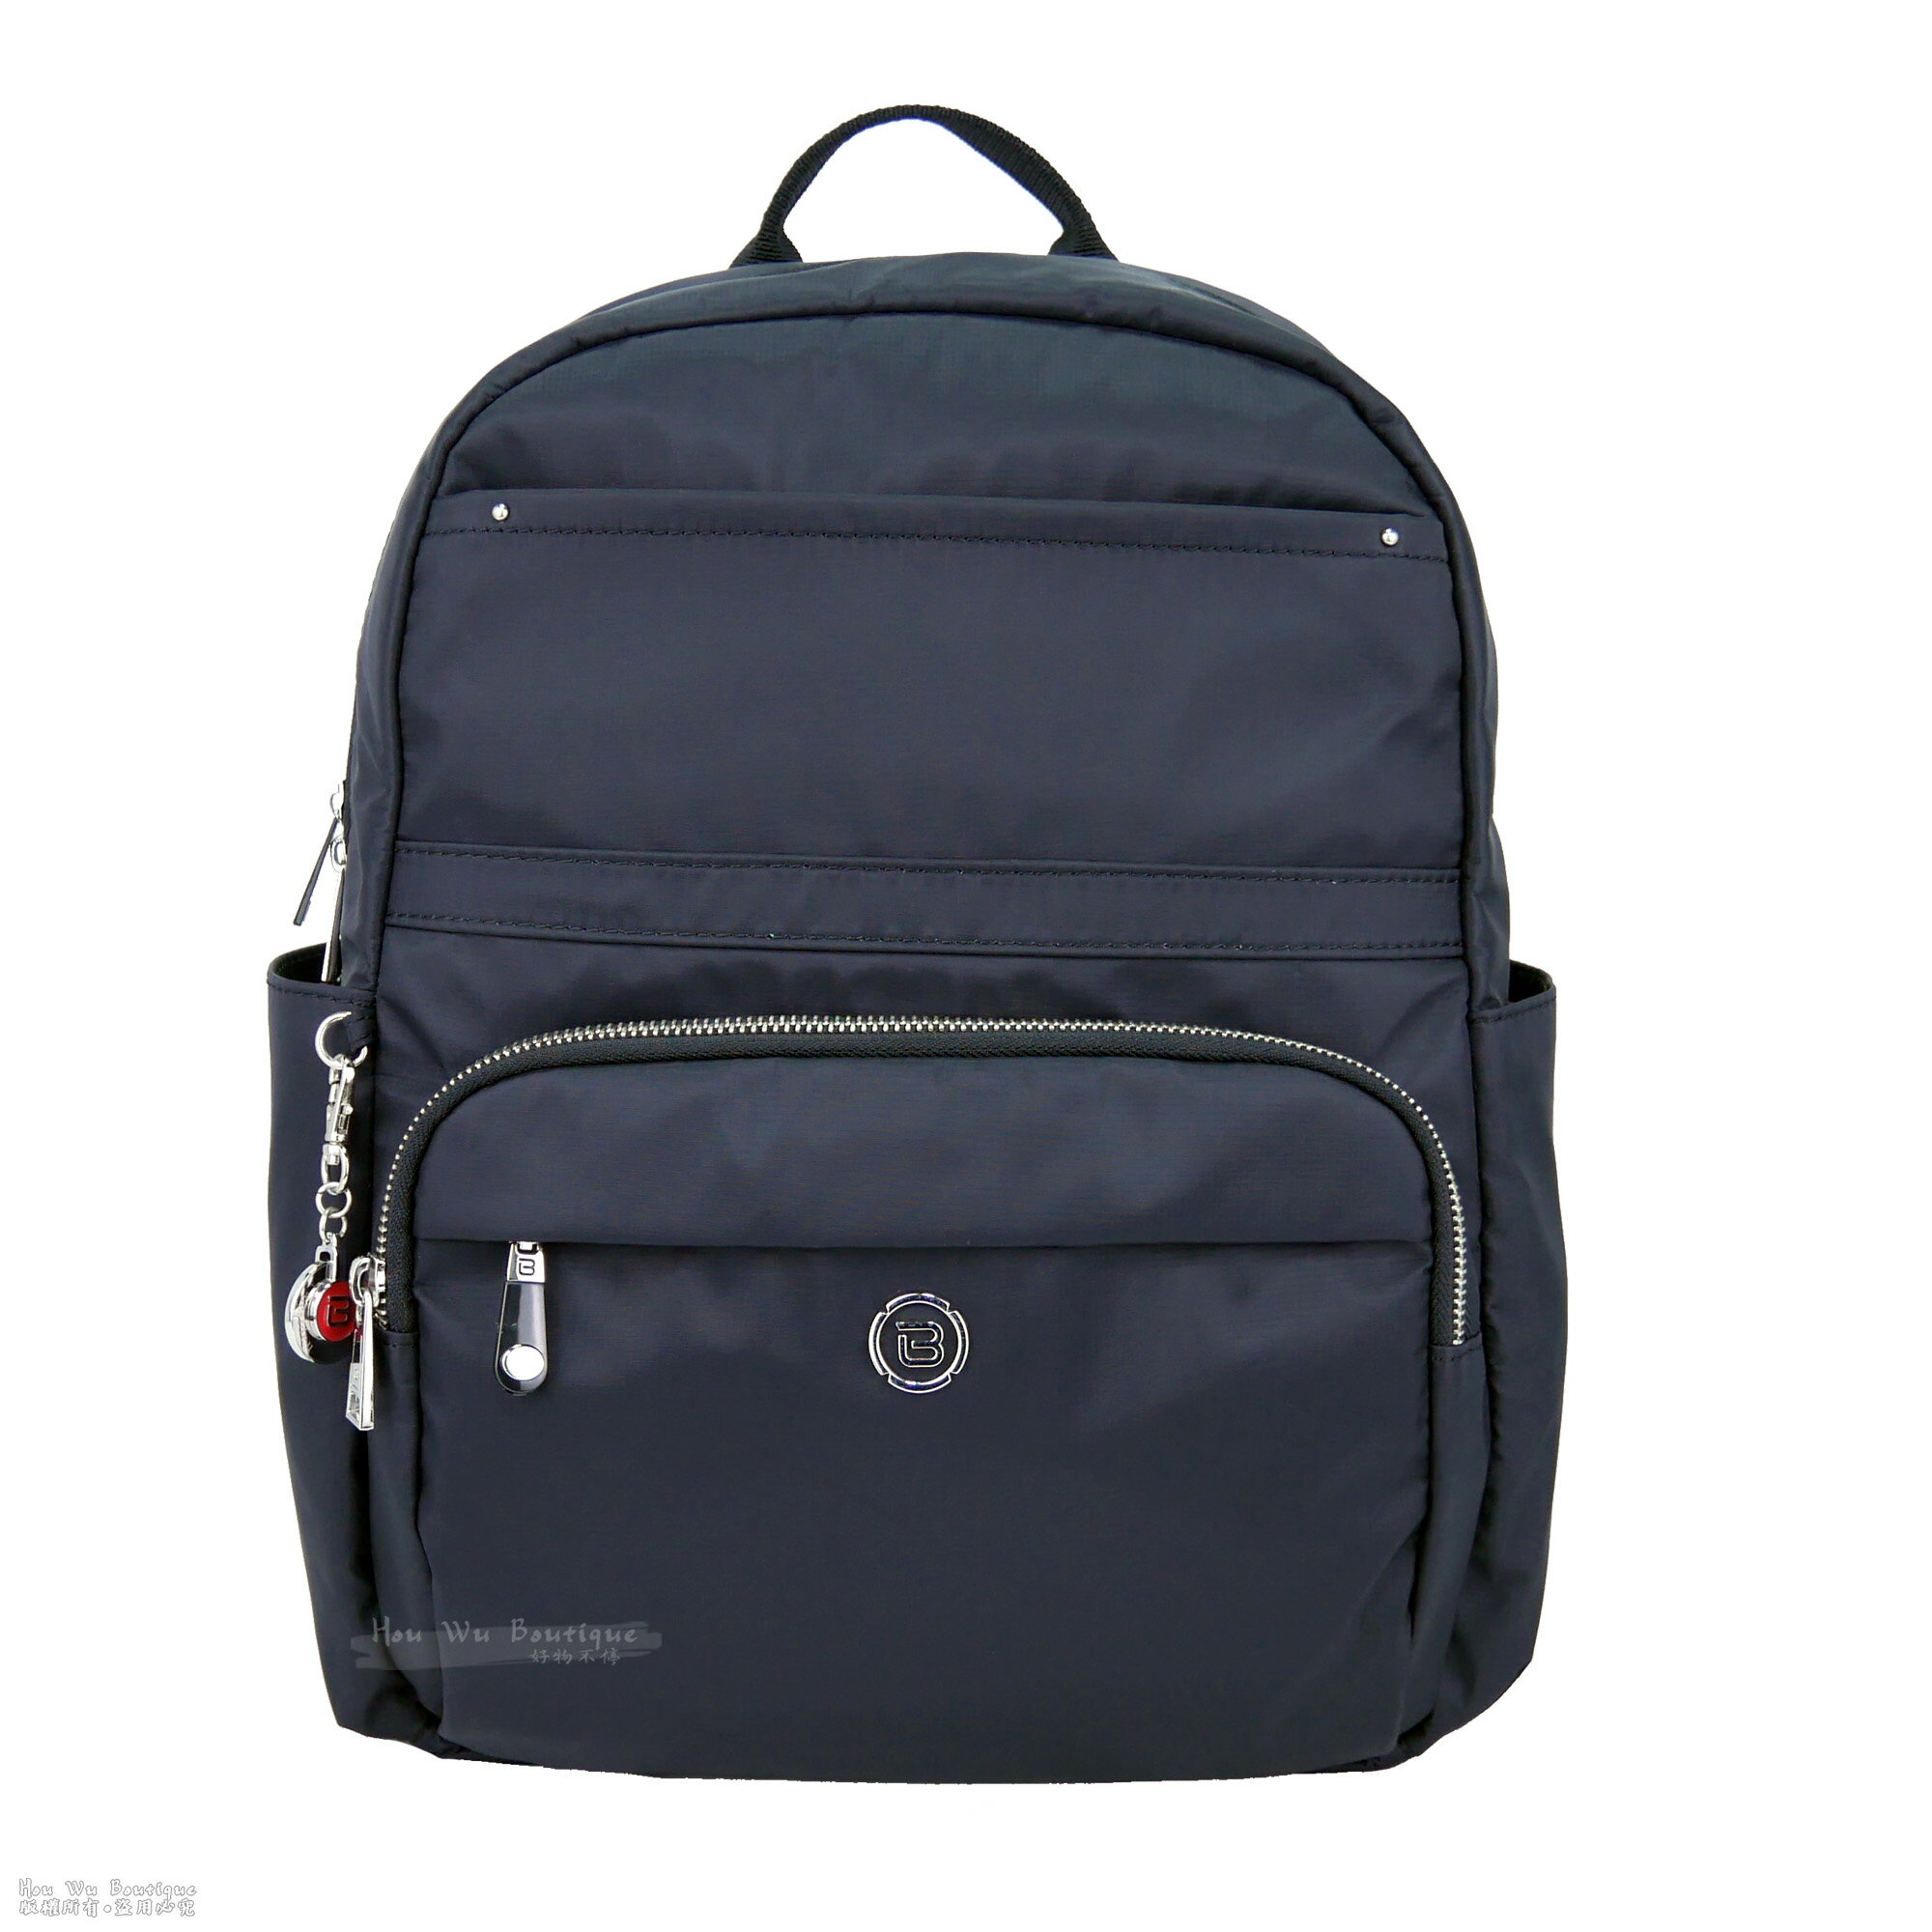 BESIDE-U 13吋筆電後背包 可插拉桿後背包 休閒後背包 商務包 後背包 A4後背包 BNUA1935 (黑)